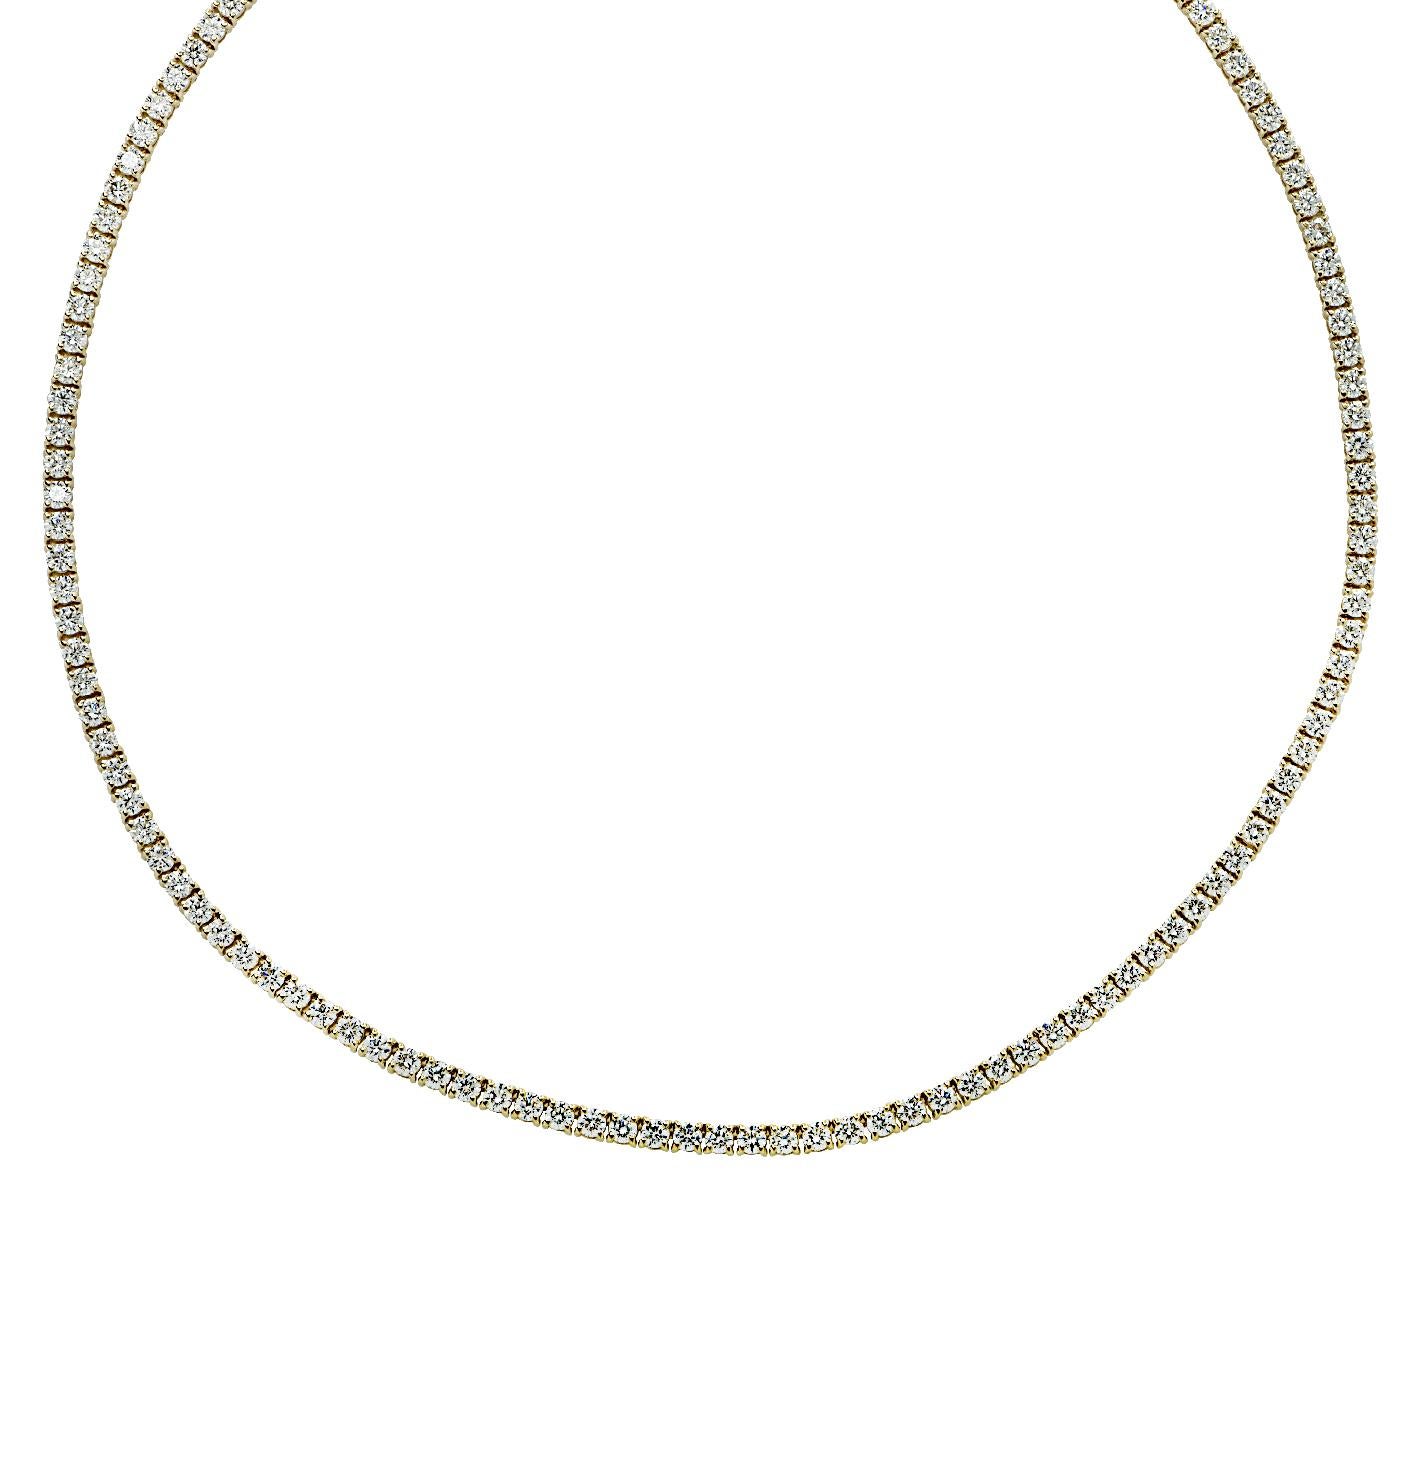 Round Cut Vivid Diamonds 10.38 Carat Straight Line Diamond Tennis Necklace For Sale